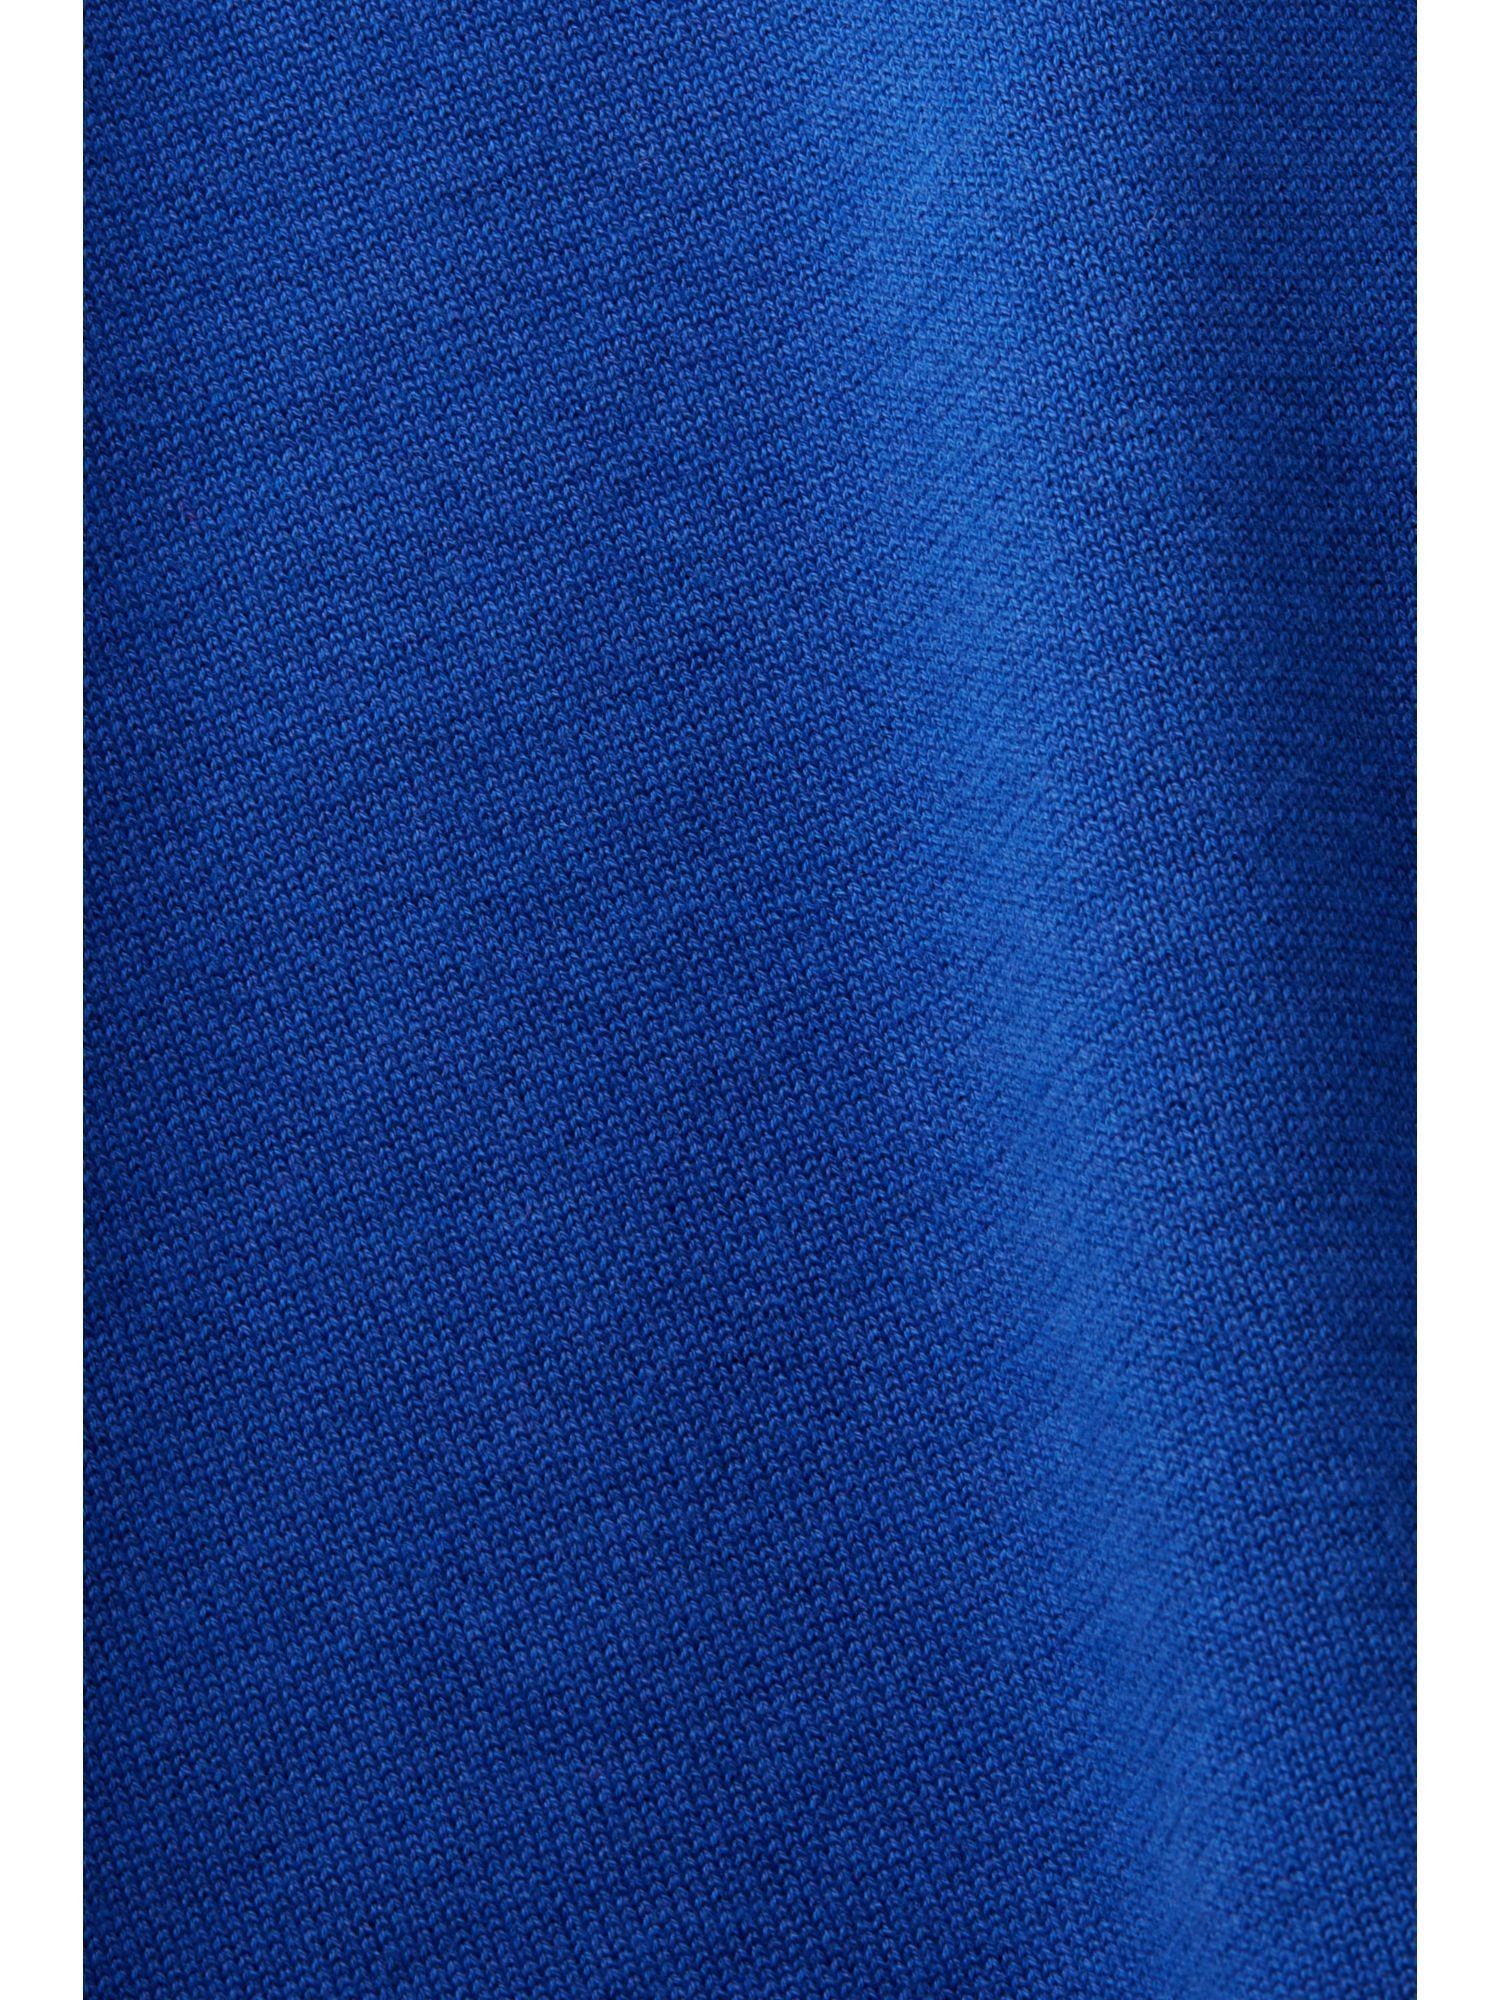 Esprit Kurzarmpullover Pullover Kurzärmliger mit Rundhalsausschnitt BRIGHT BLUE